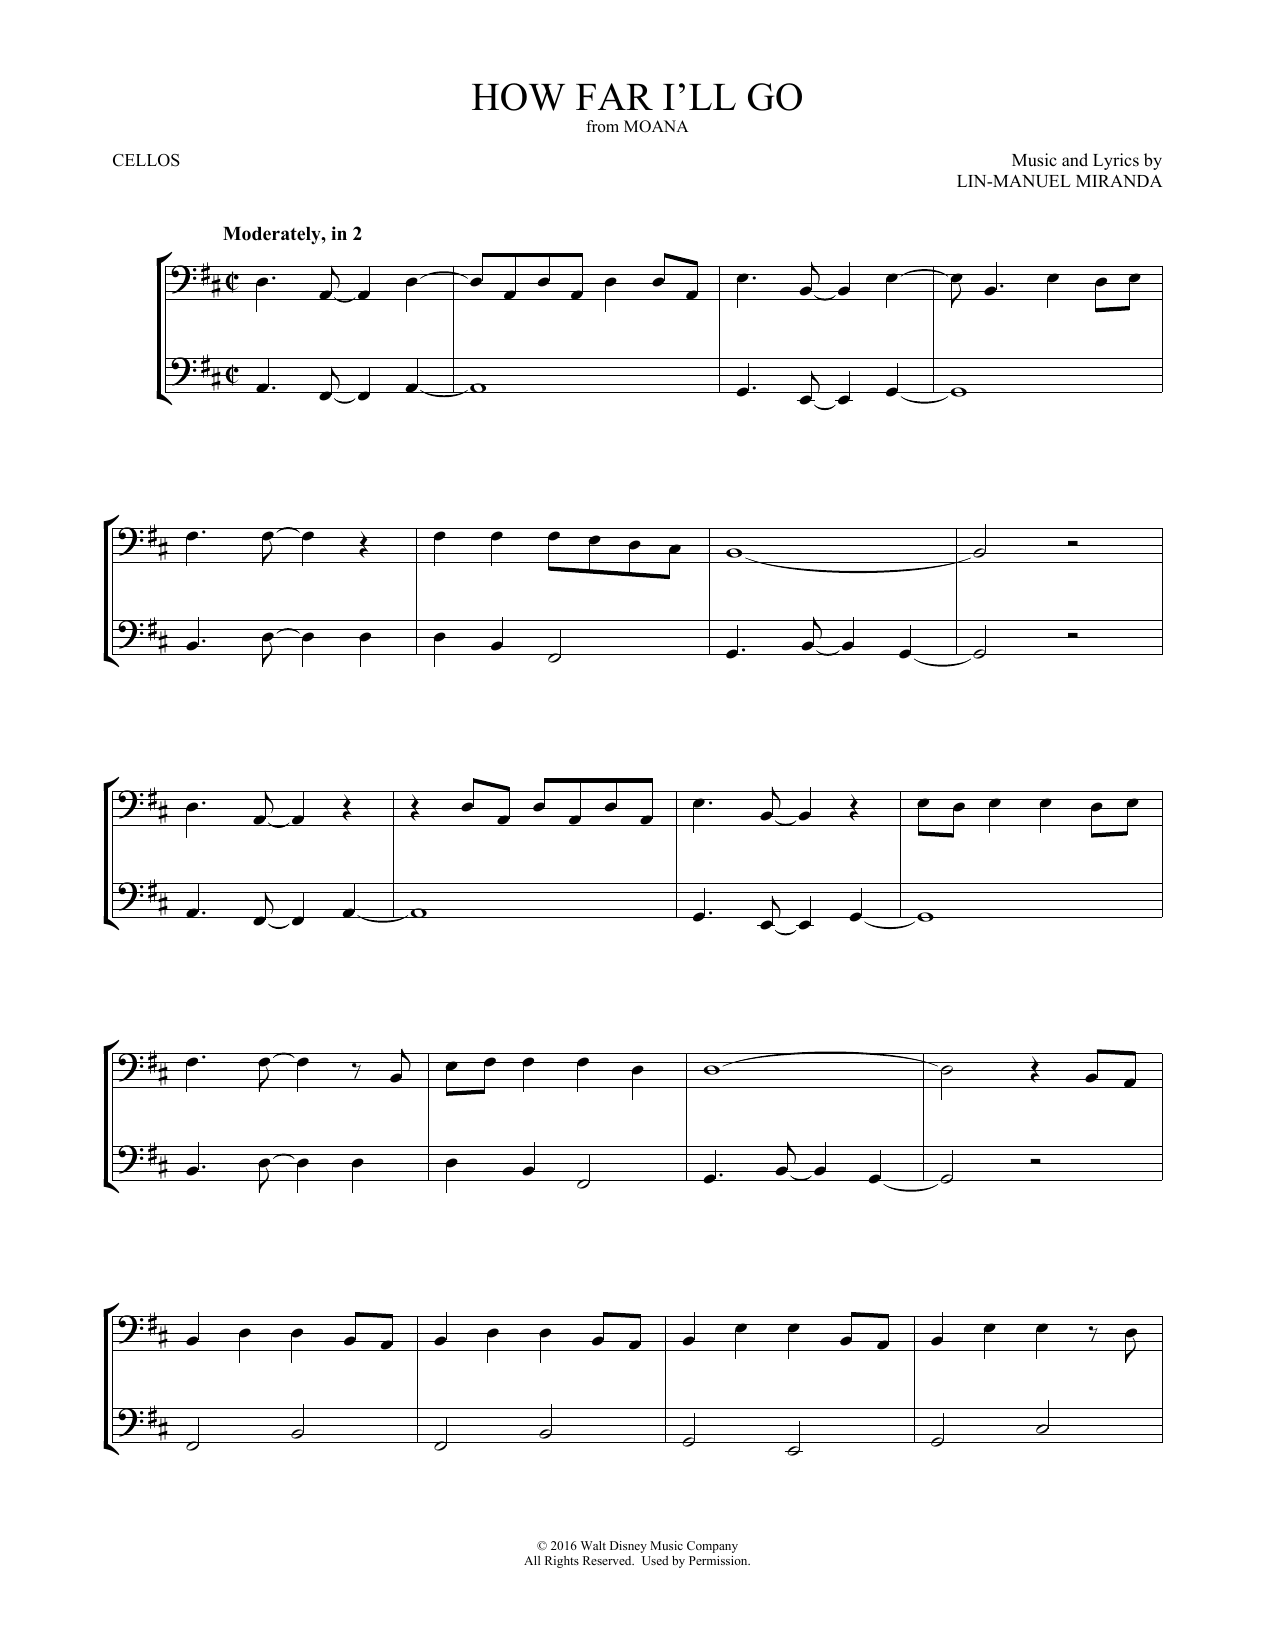 Lin-Manuel Miranda How Far I'll Go (from Moana) Sheet Music Notes & Chords for Alto Sax Duet - Download or Print PDF